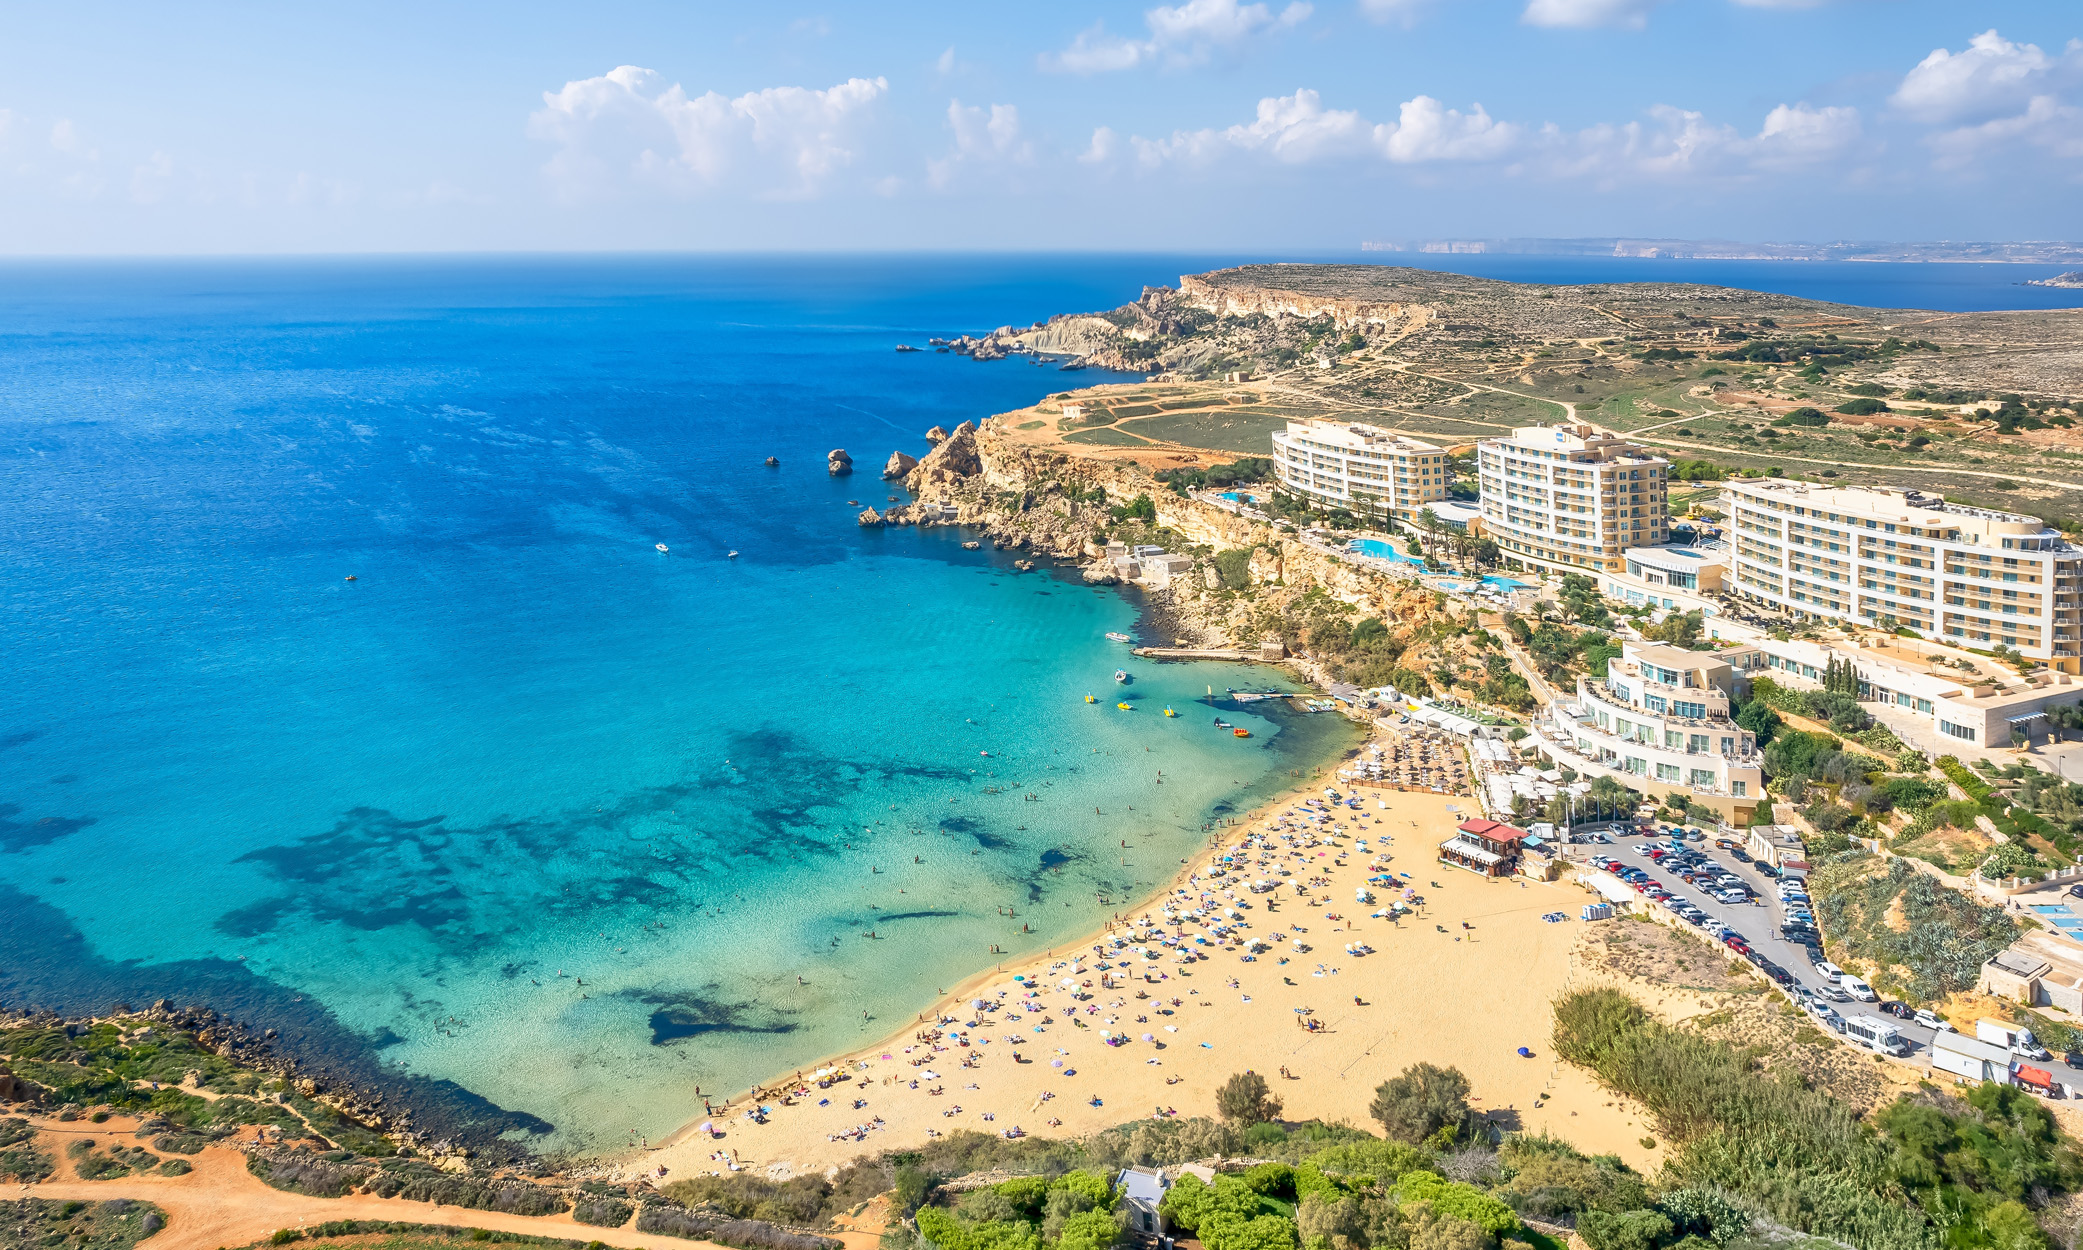 Malta is 1 of 4 countries offering EU golden visas.